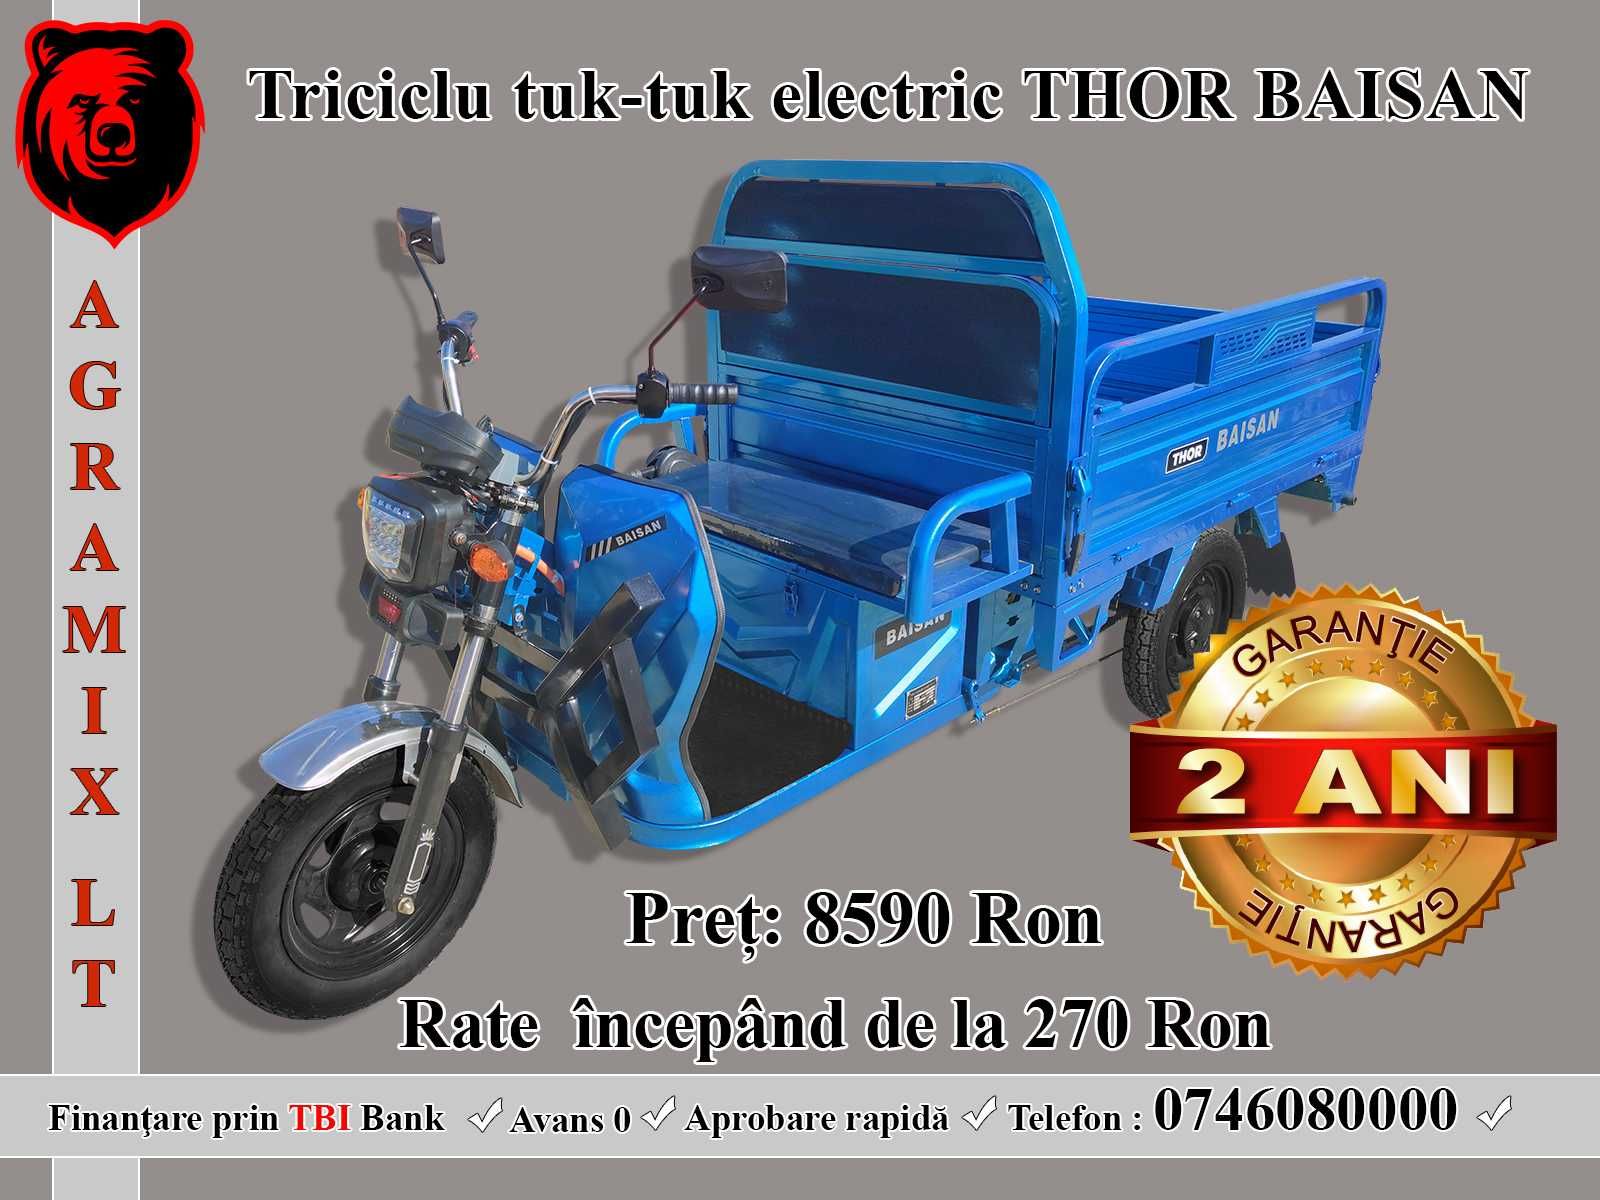 Thor Baisan 1800 W triciclu electric Agramix nou